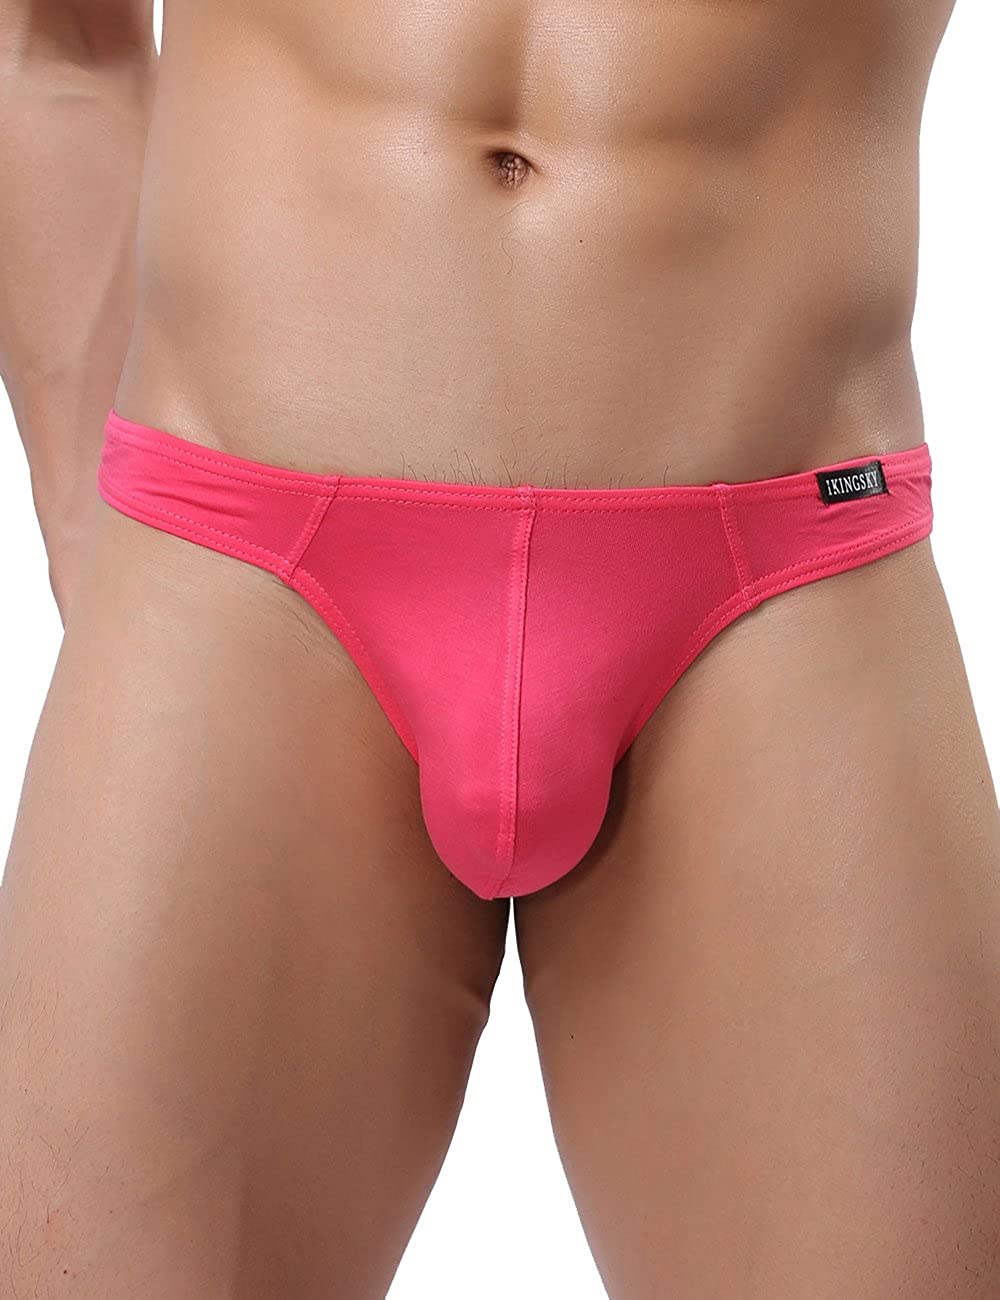 Ikingsky Mens Everyday Basic Modal Thong Underwear Sexy No Show T Back Under Pa Ebay